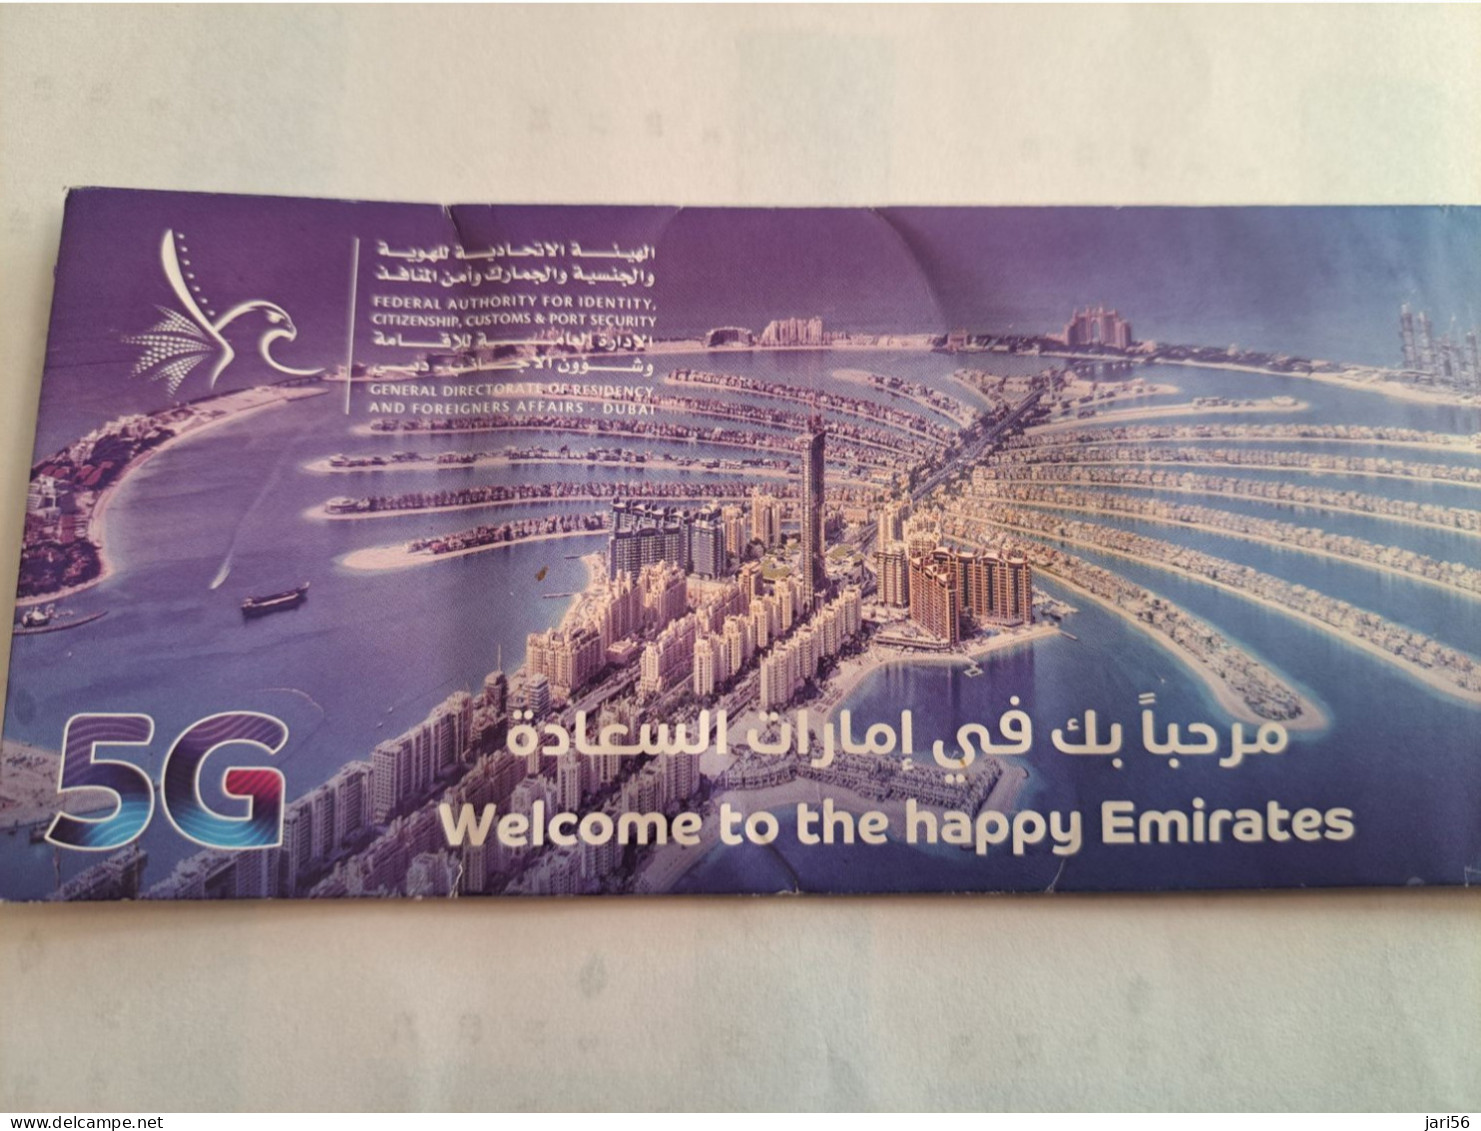 UNITED ARAB EMIRATES / SIM GSM CARD/ - United Arab Emirates-G.S.M CARD- Tourist SIM  ** 16143** - United Arab Emirates